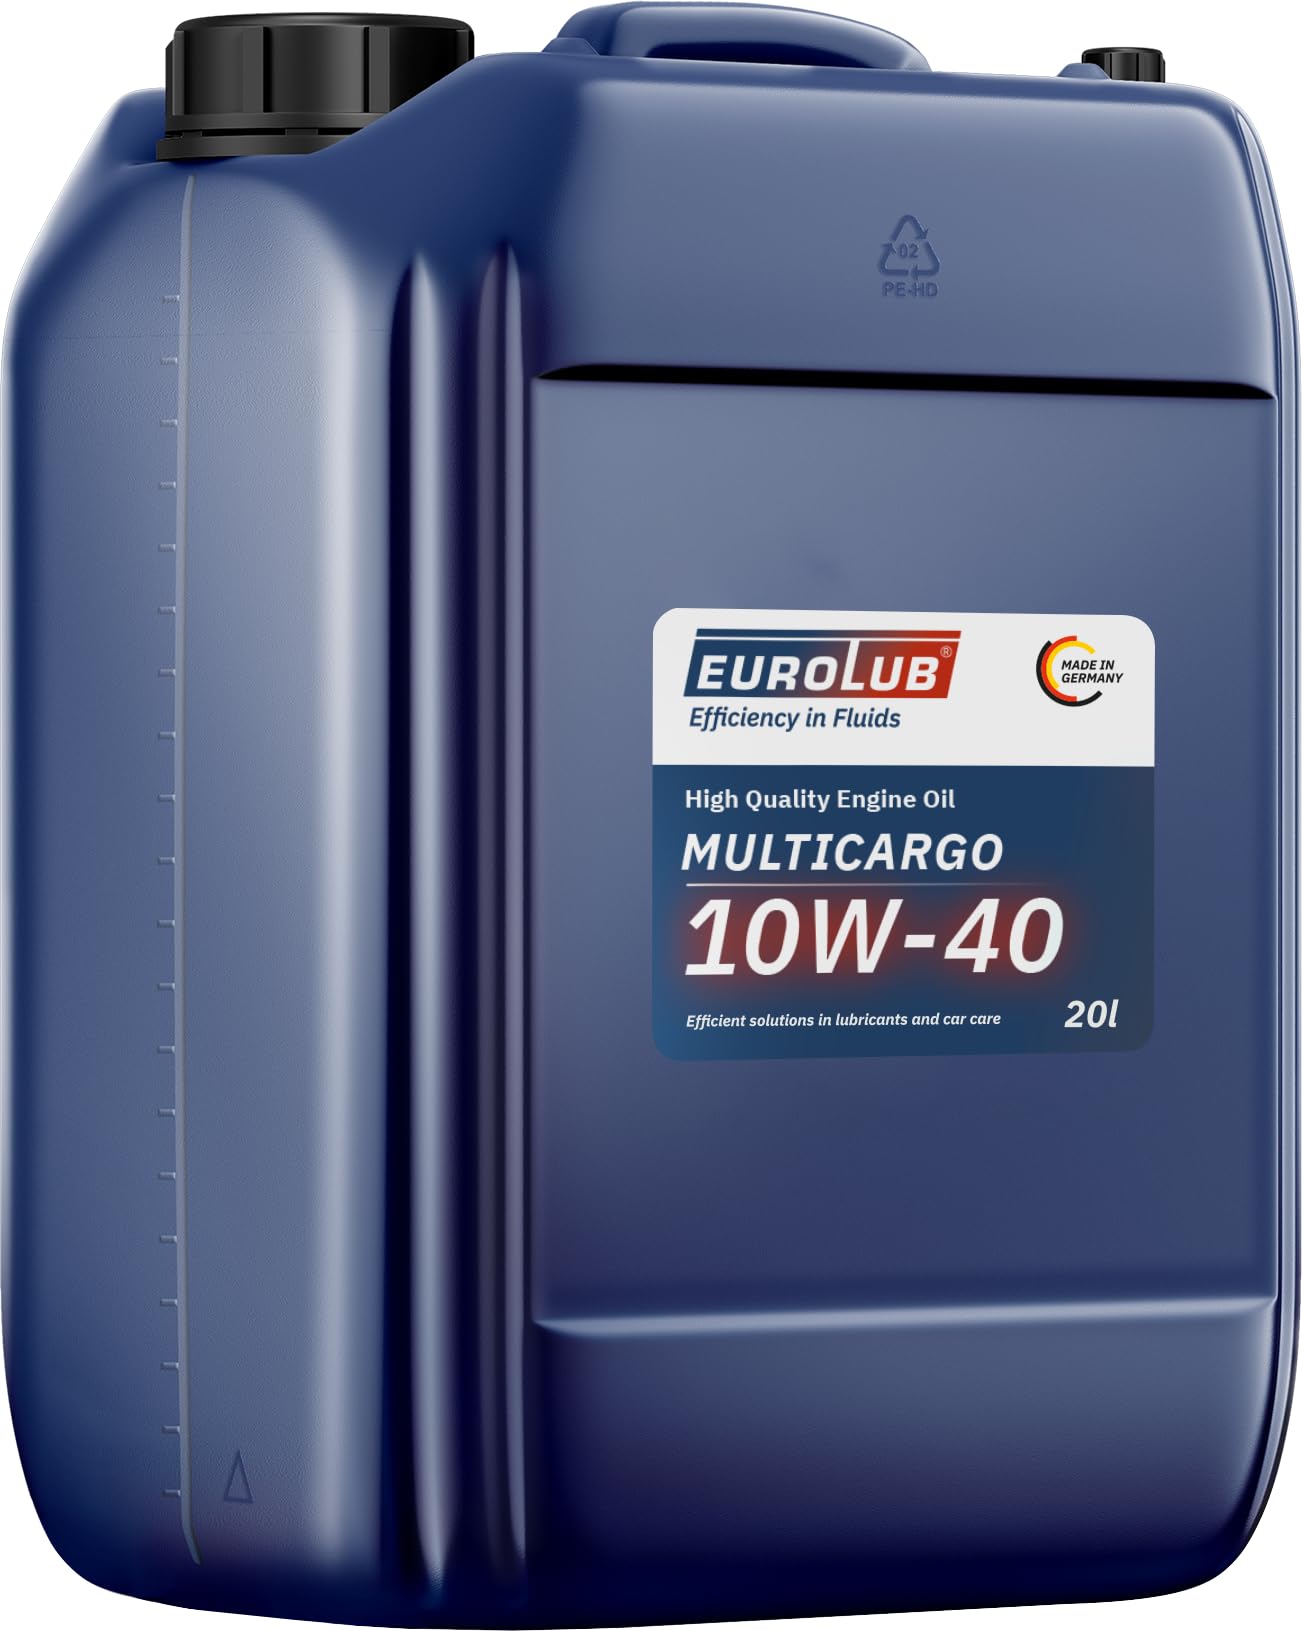 EUROLUB MULTICARGO SAE 10W-40 Motoröl, 20 Liter